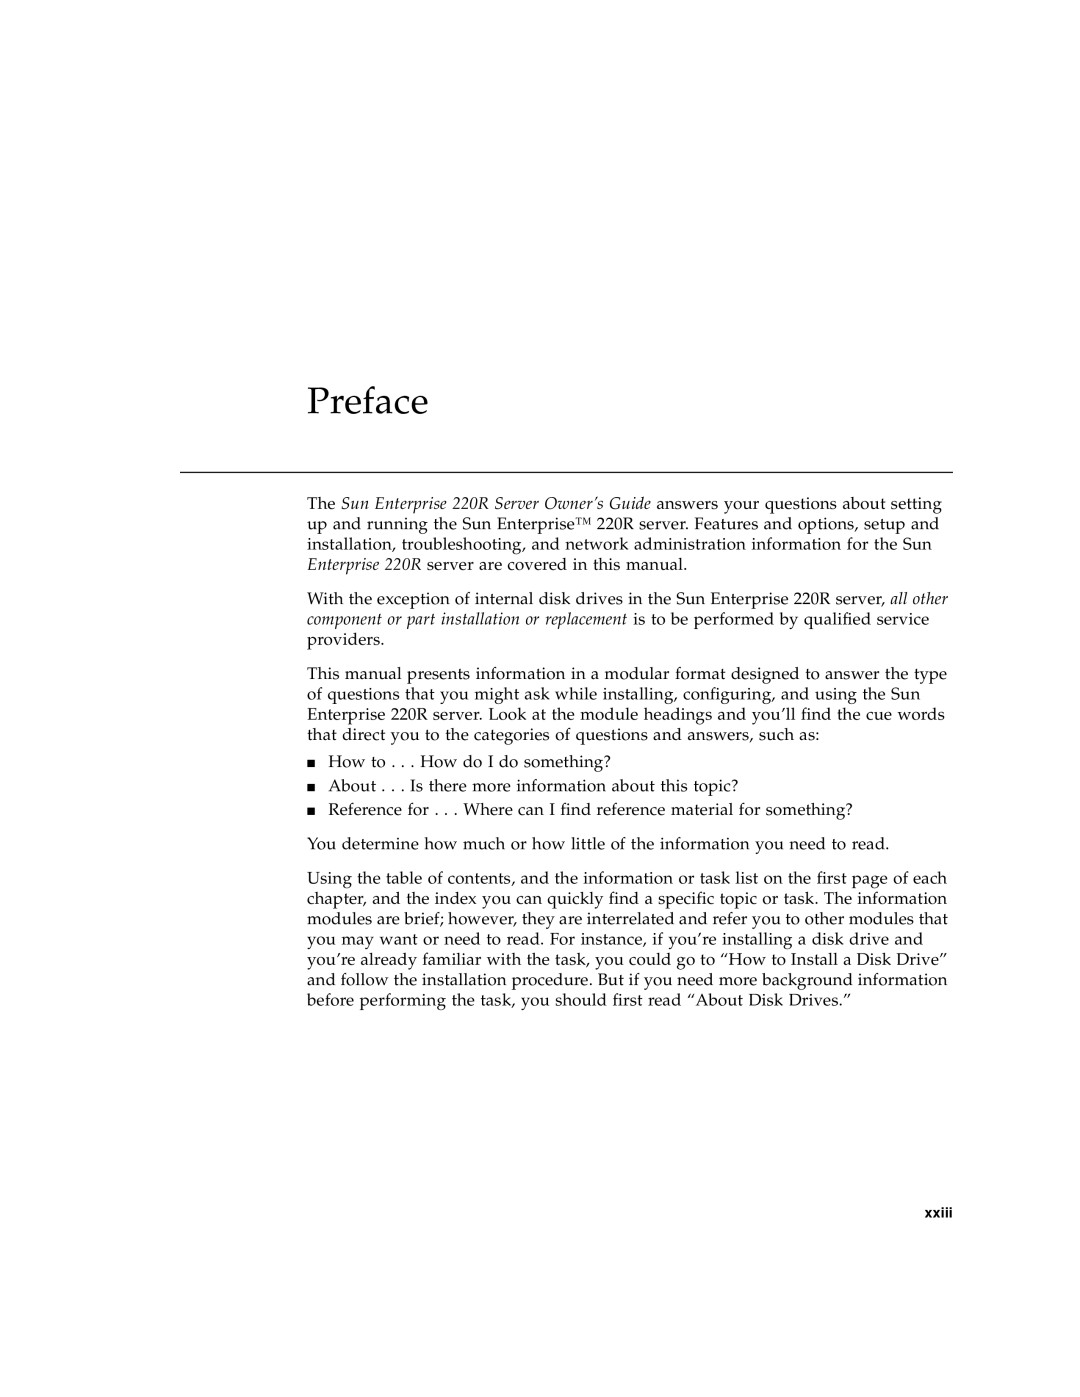 Sun Microsystems 220R manual Preface 